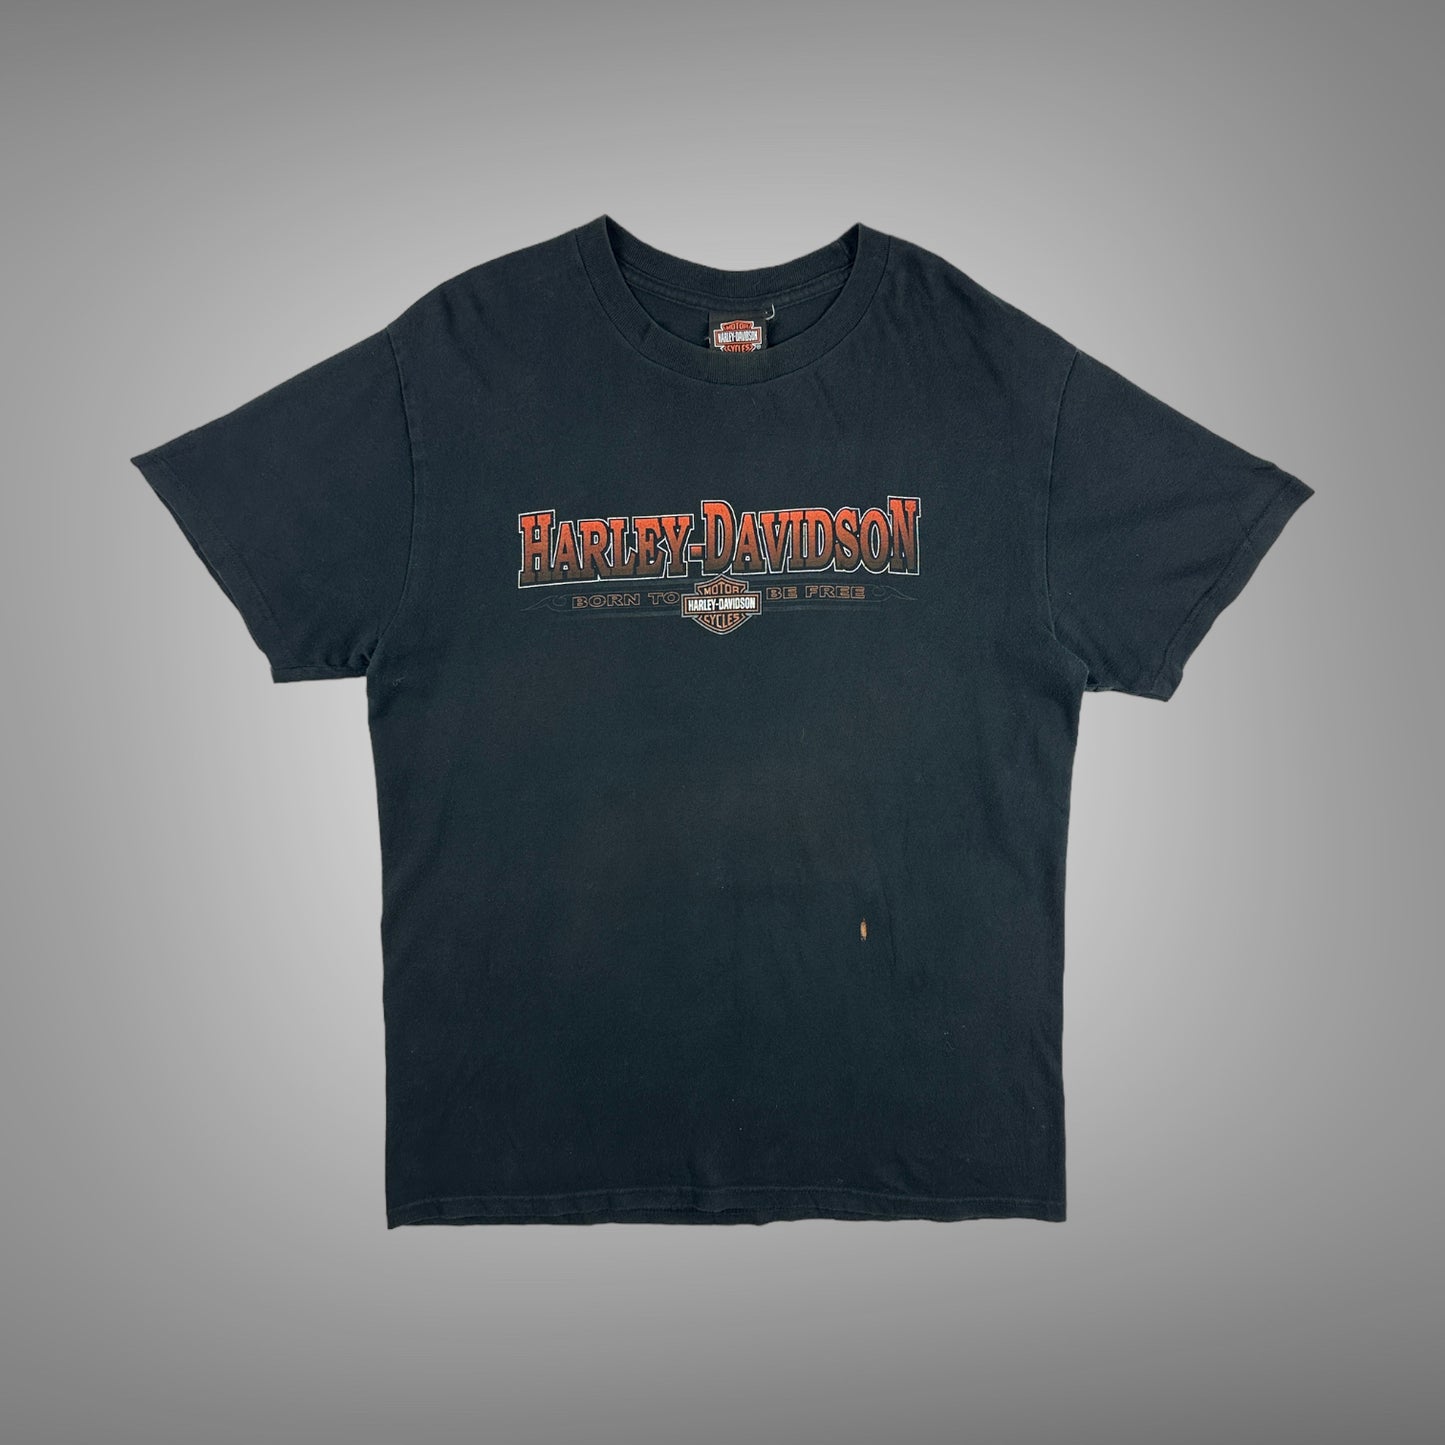 Vintage Harley Davidson "Green Mountain" T-Shirt schwarz L